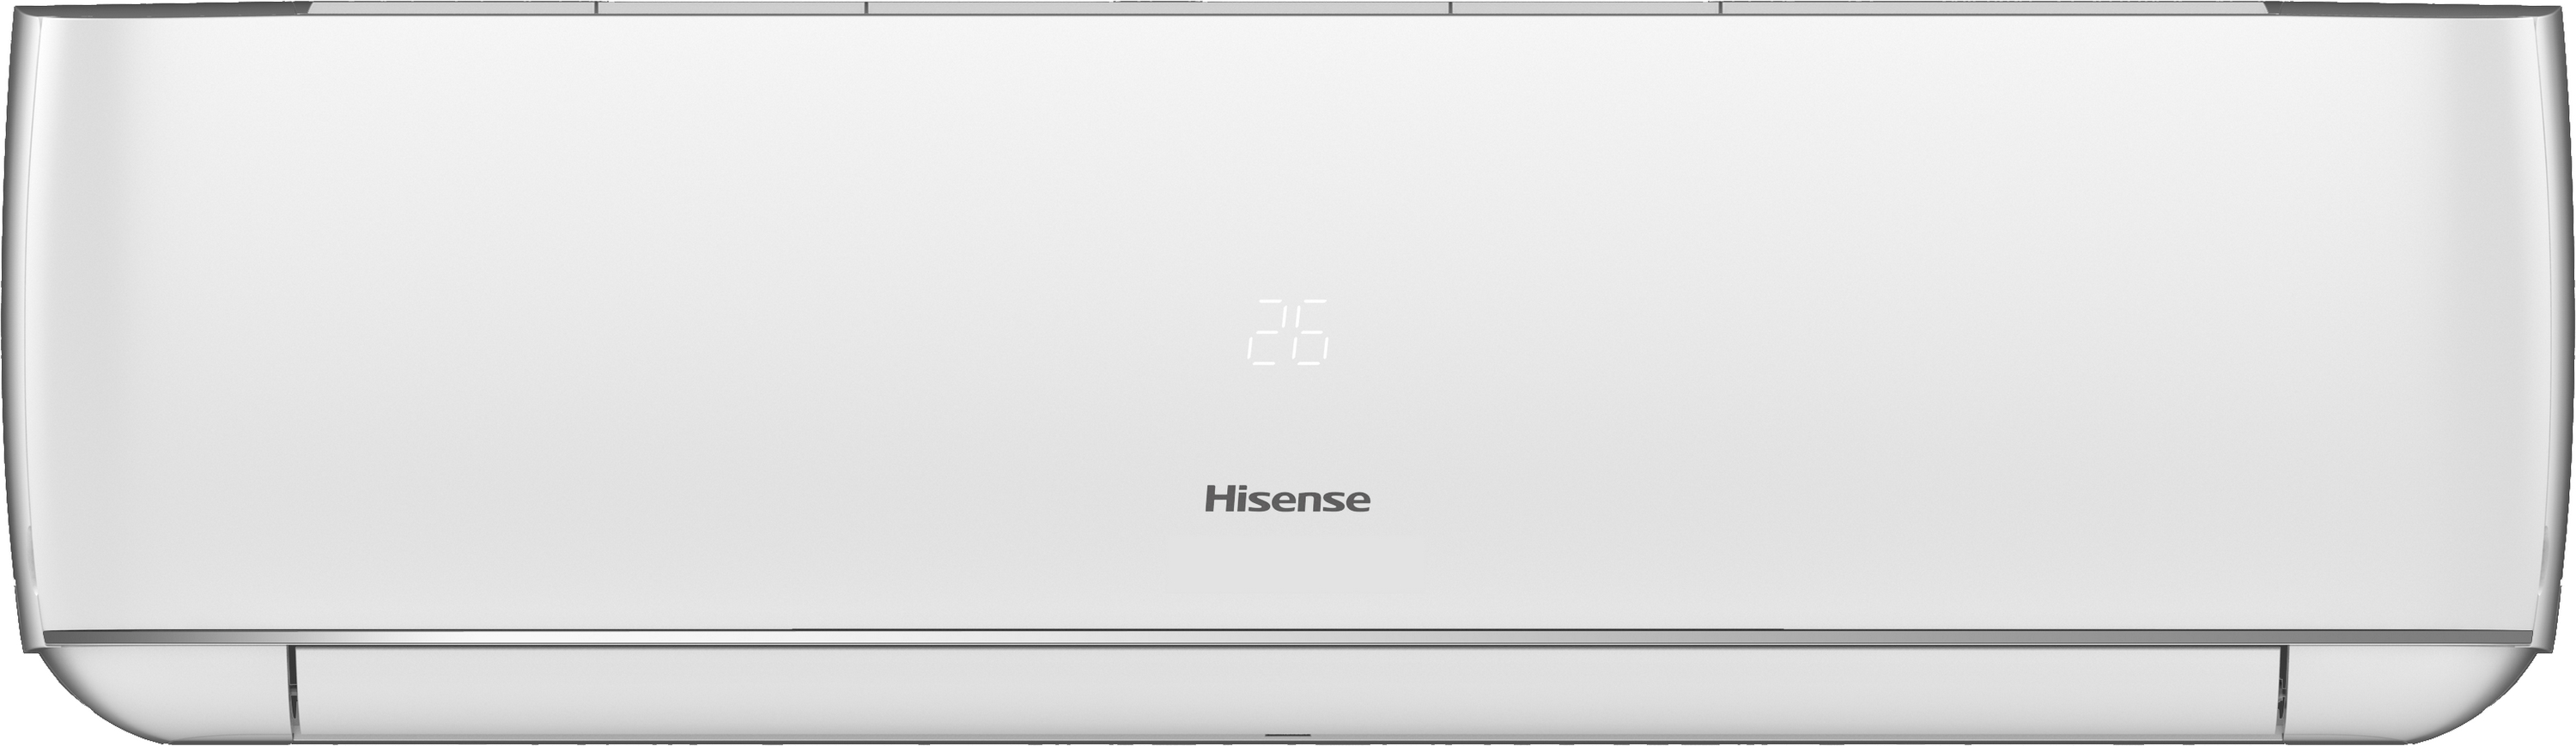 Кондиционер сплит-система Hisense Husky TV50BA0E цена 0.00 грн - фотография 2